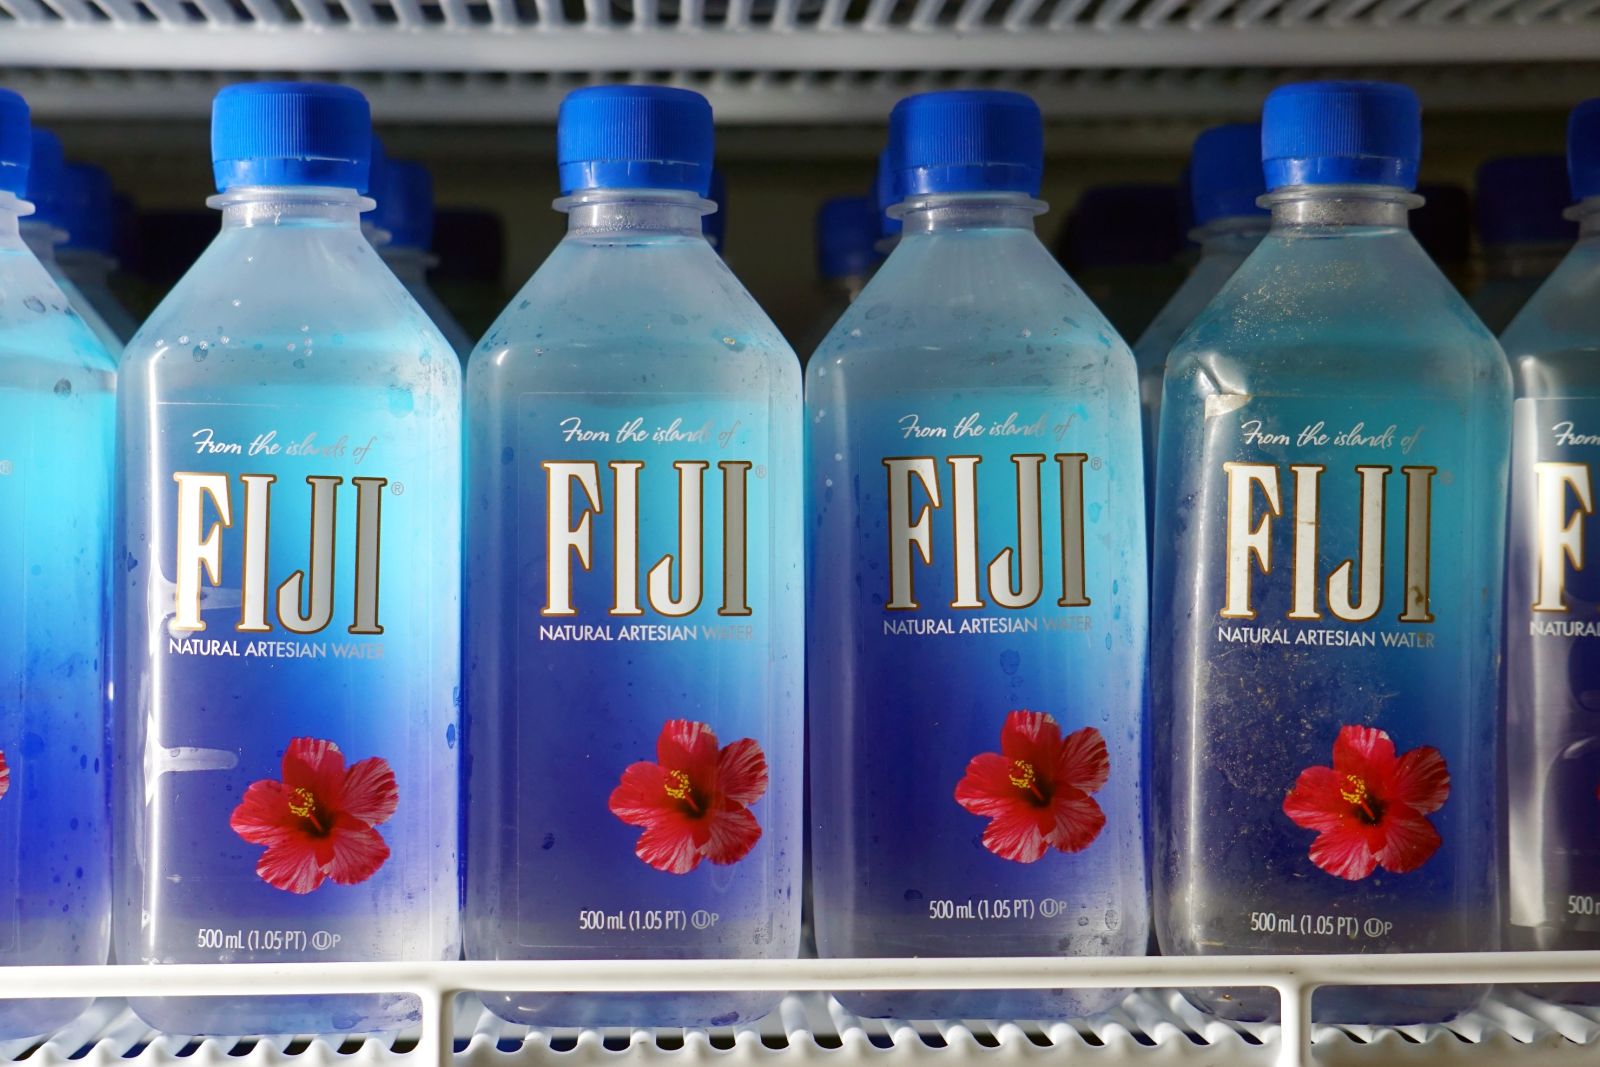 Fijiwasser